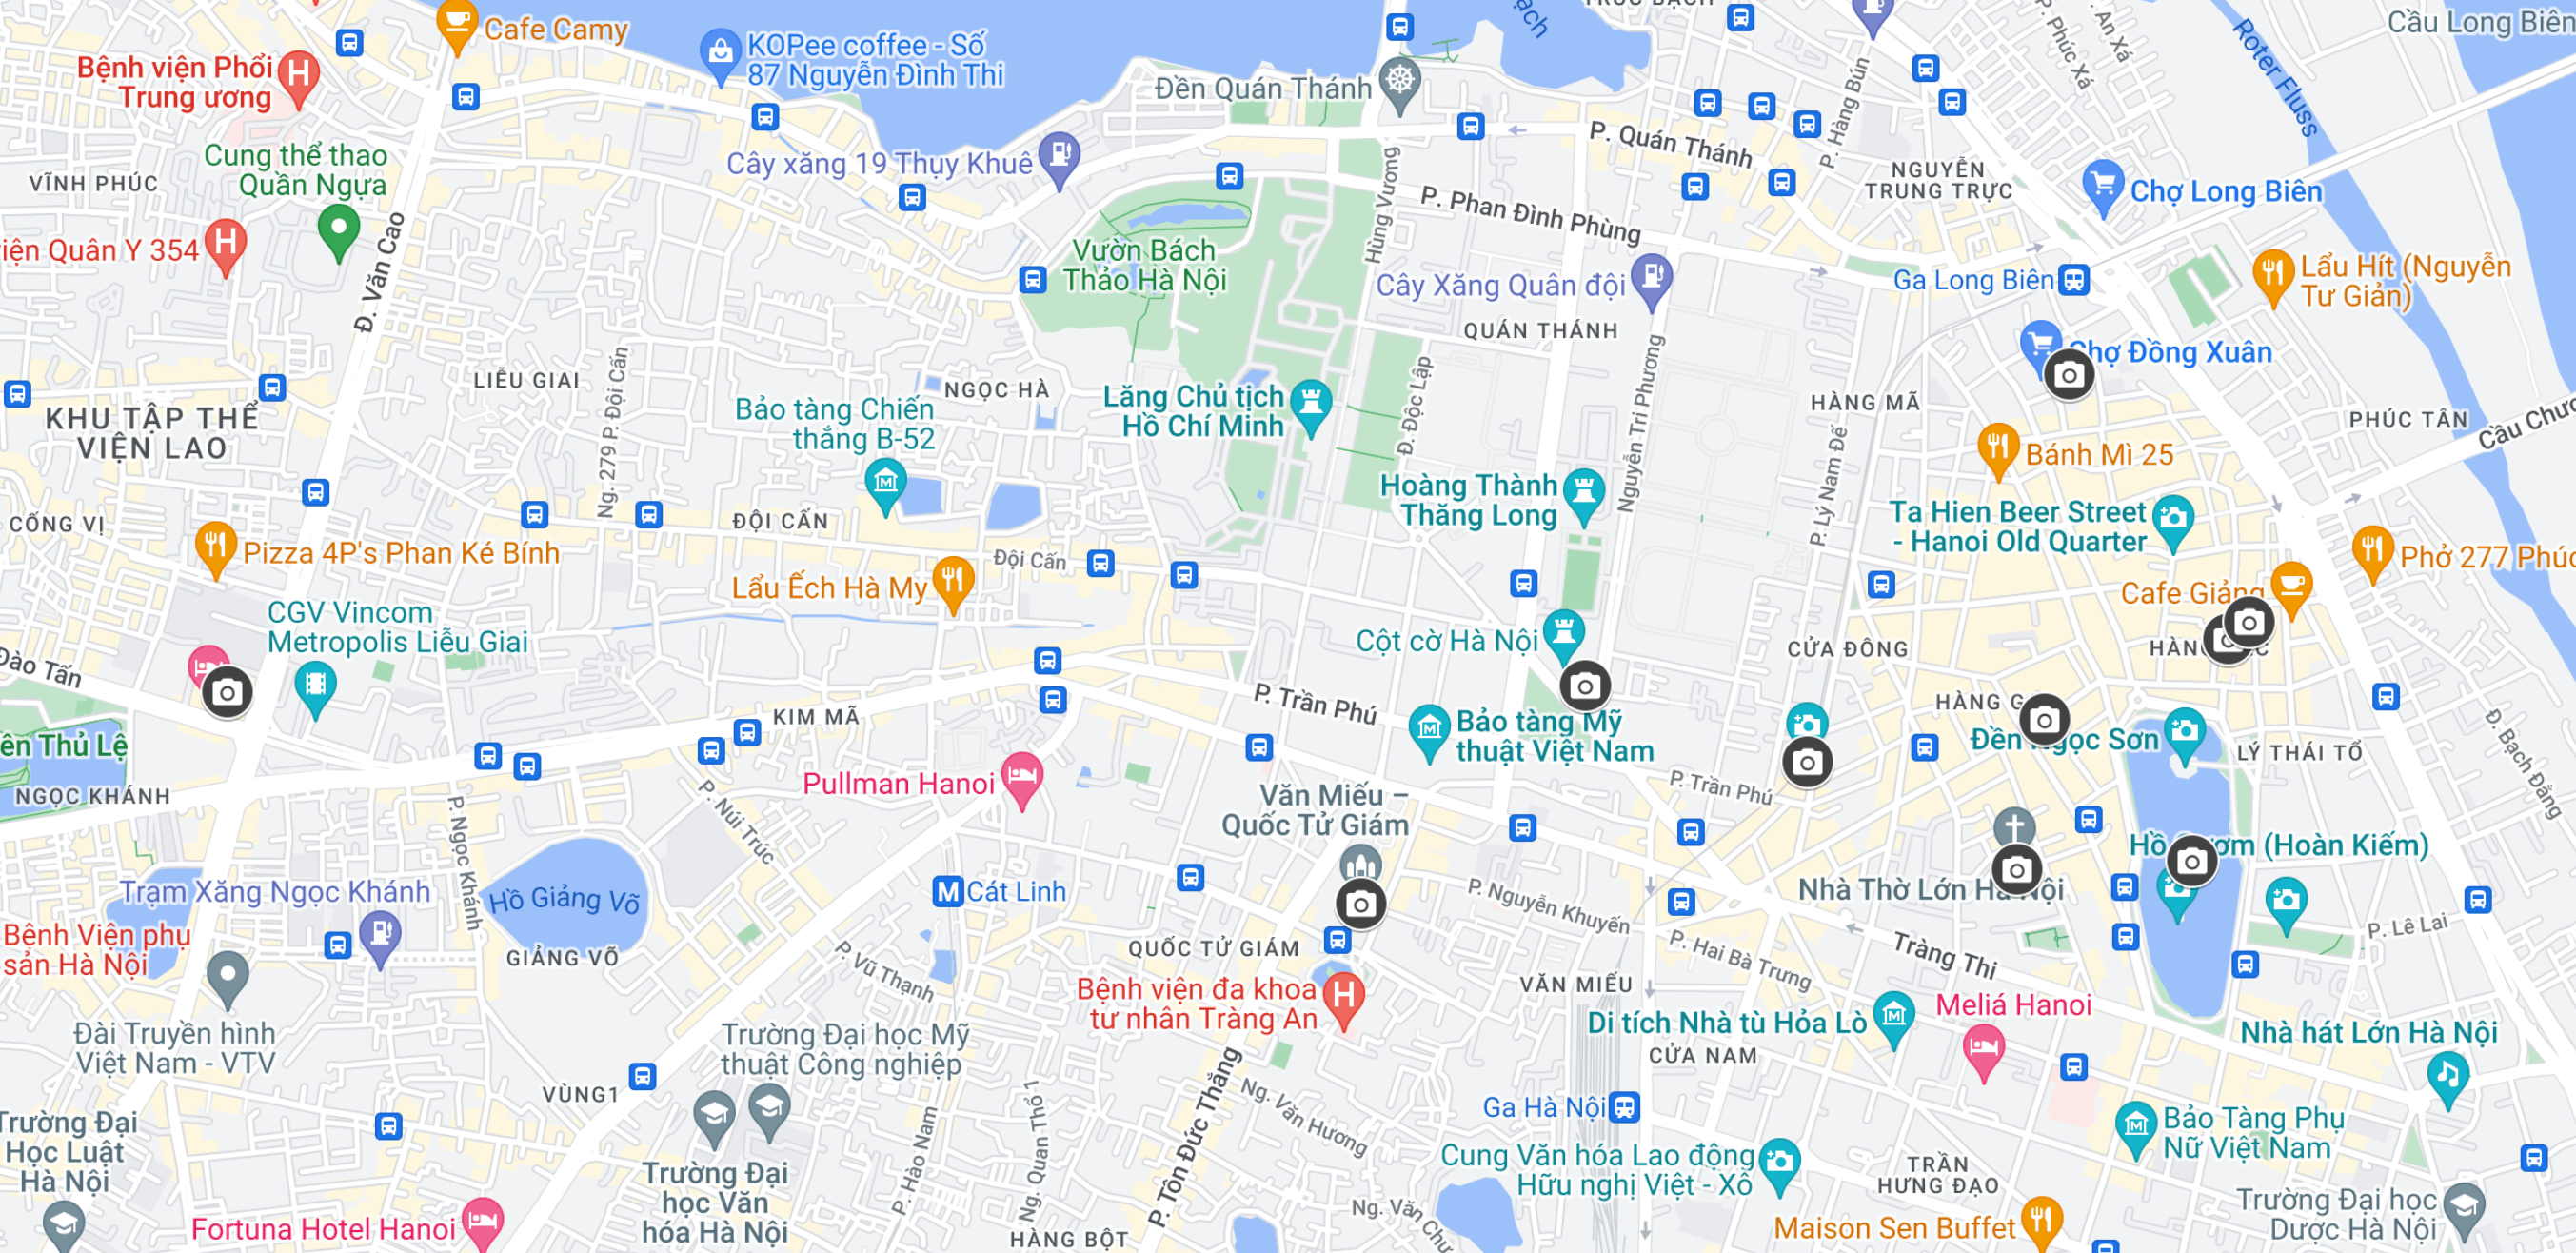 Google Maps Hanoi Vietnam